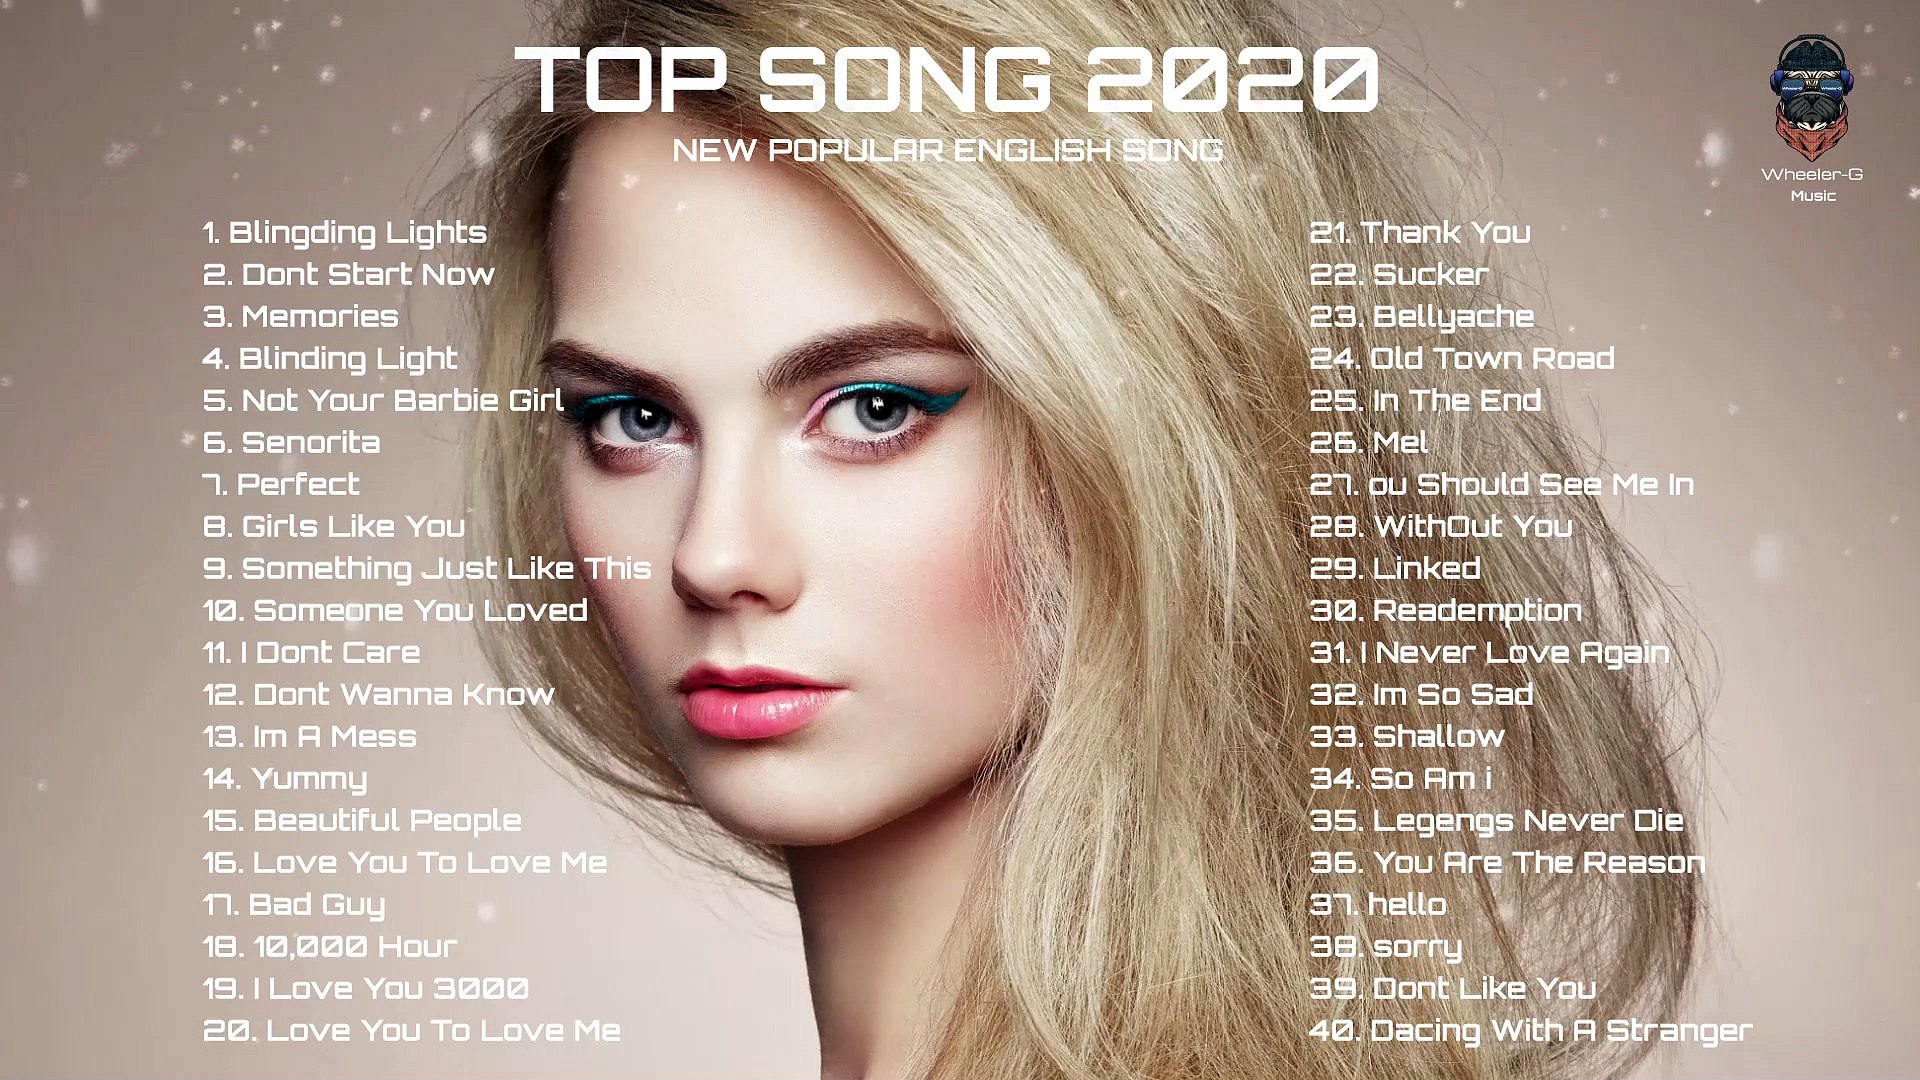 Music Top 50 Song - Music Billboard -Music Top Songs 2020-[Wheeler-G]